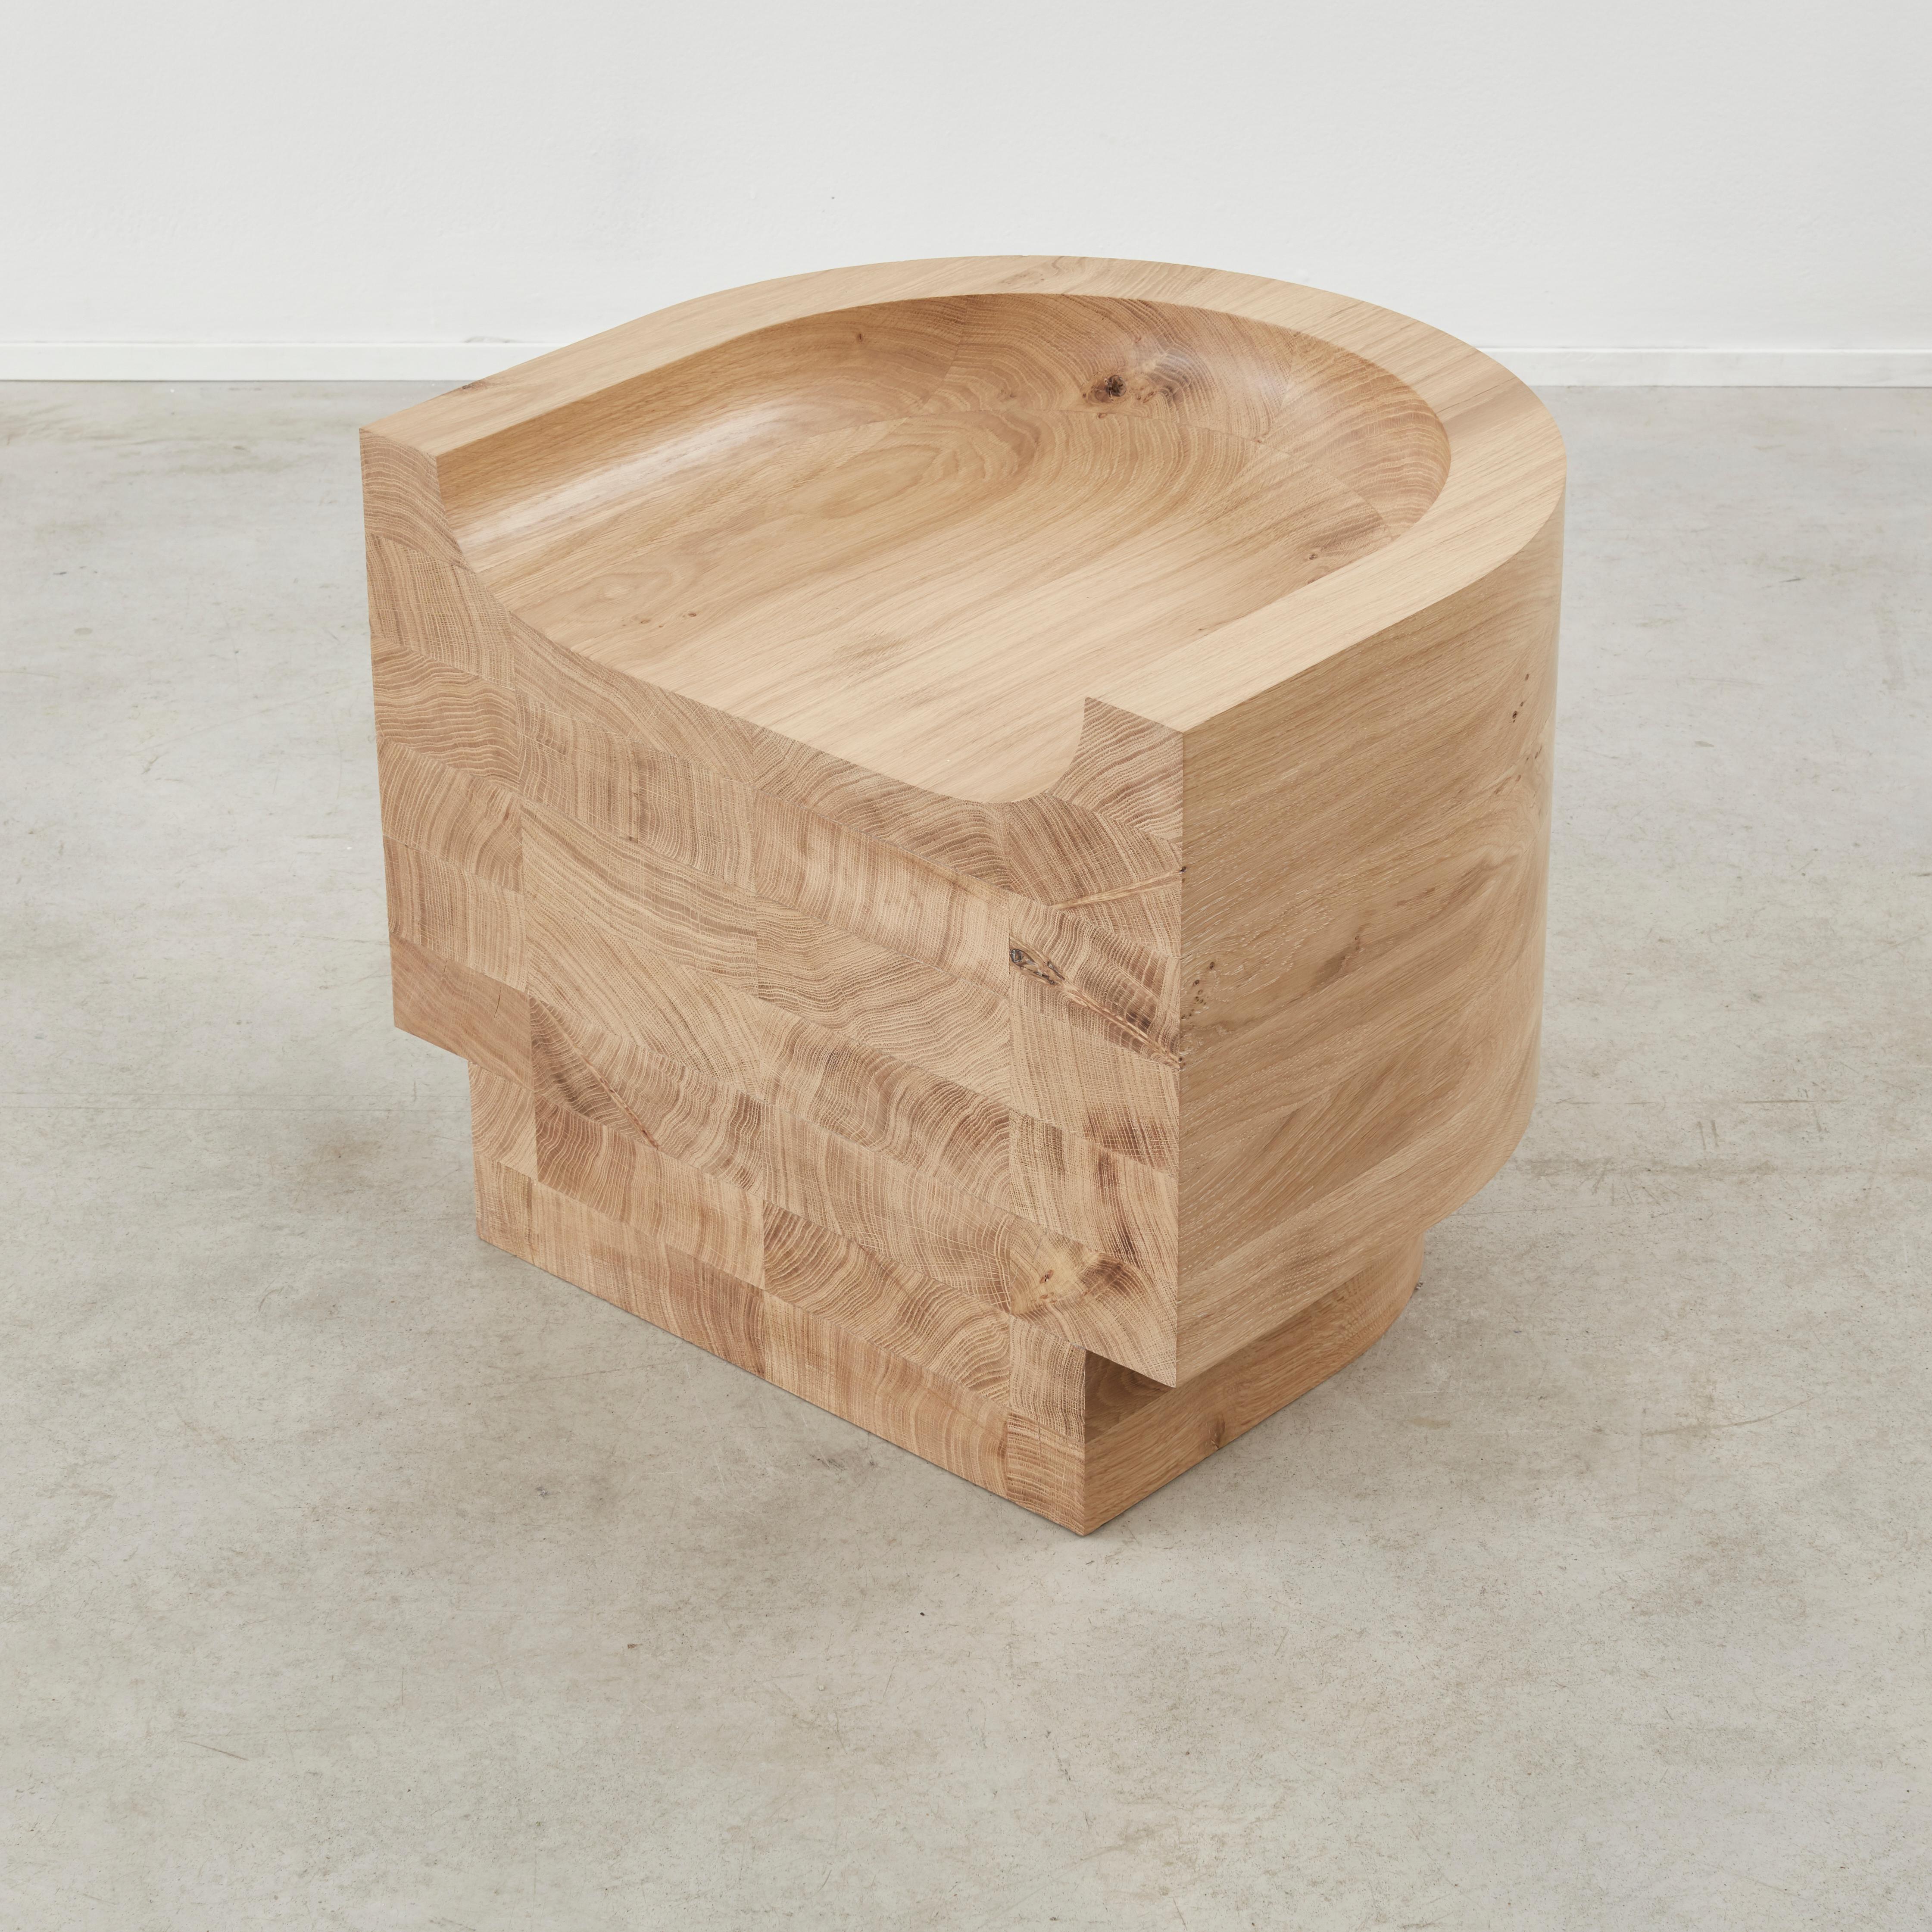 Benni Allan 'Low Chair' in oak by EBBA, UK, 2022 For Sale 2